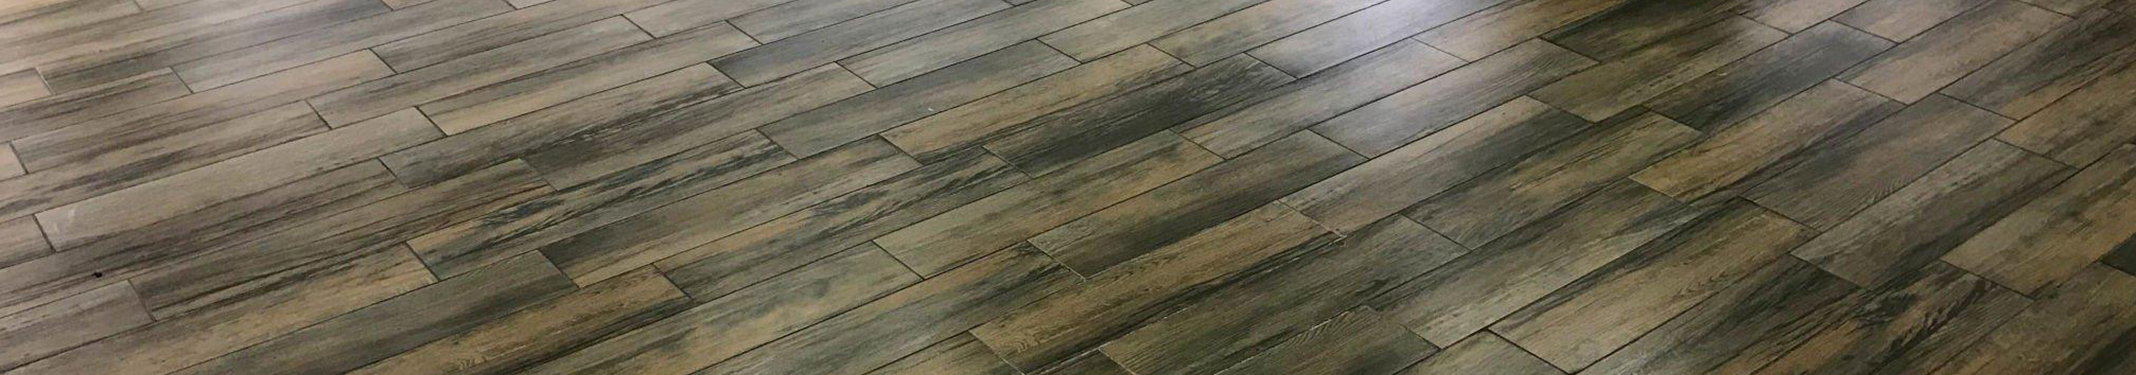 Timber Flooring Installation Melbourne | Prestige Floors